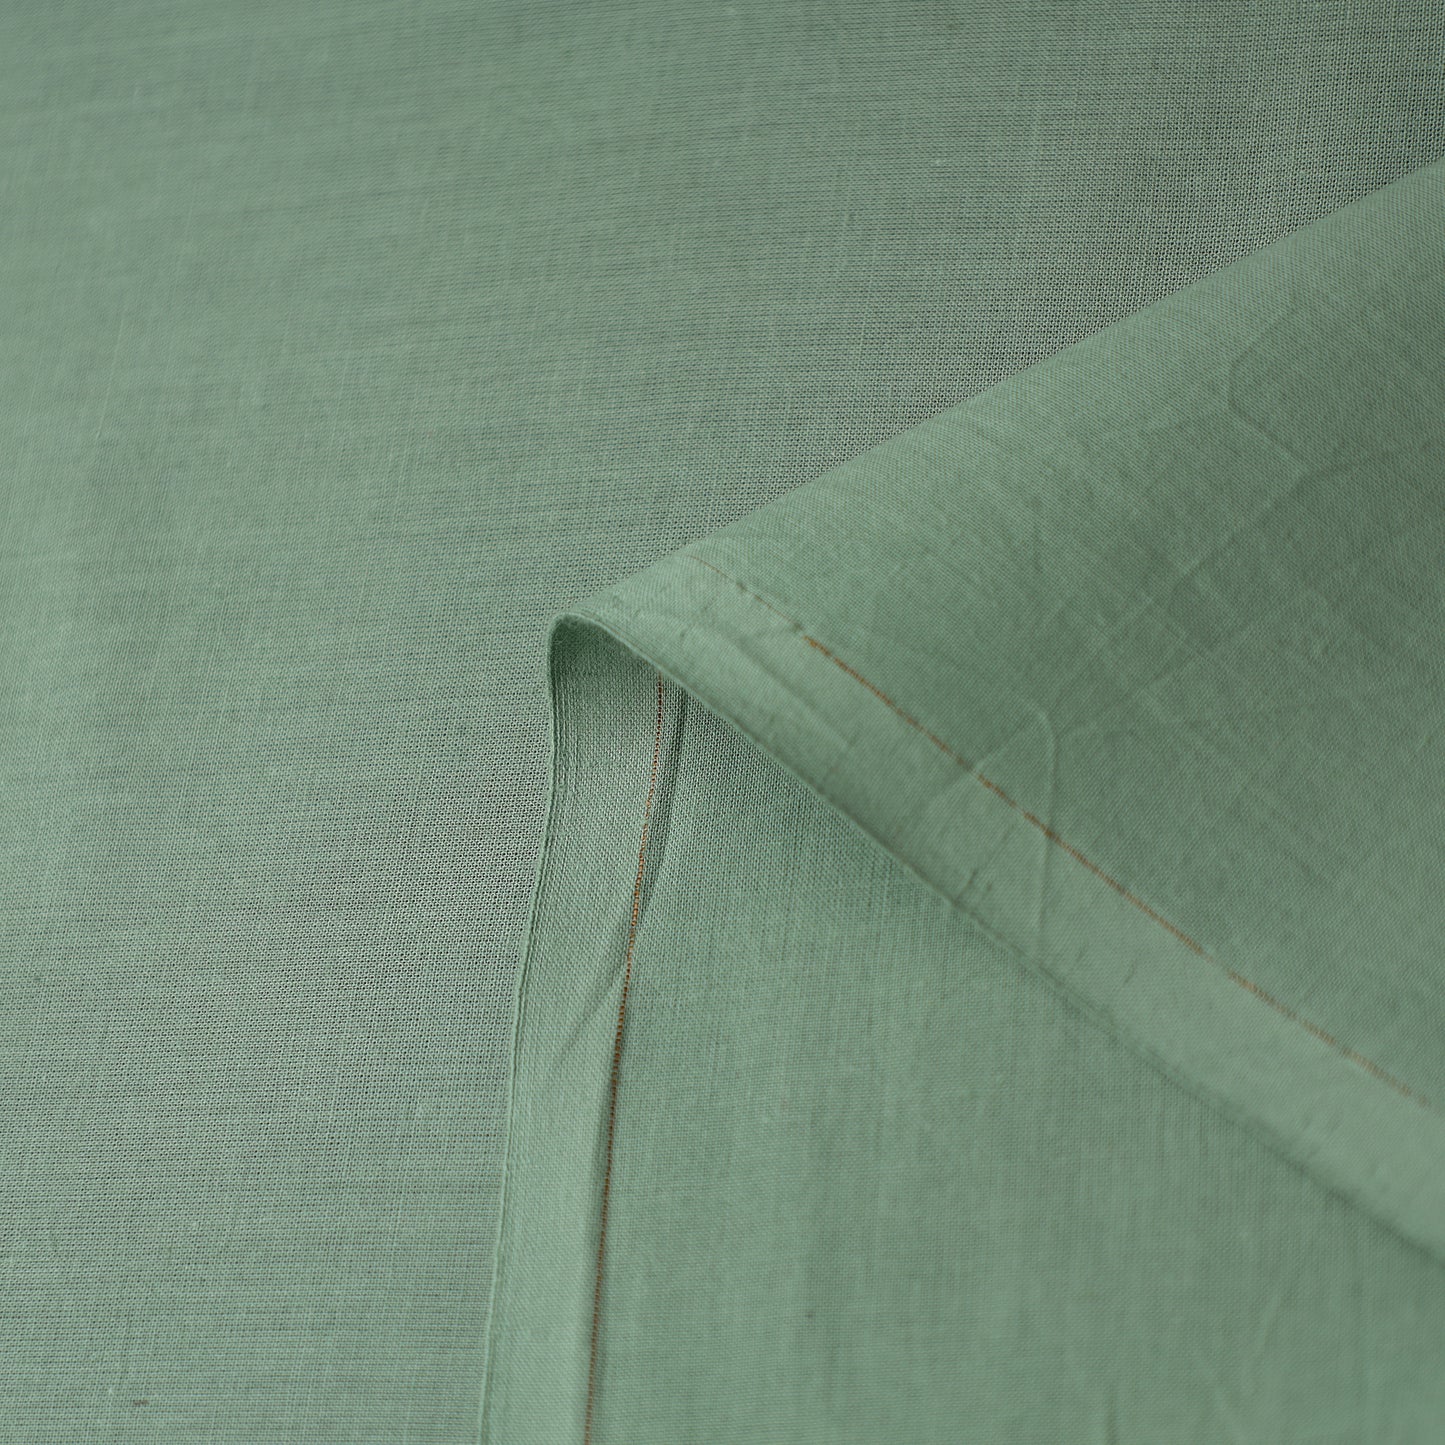 Green - Prewashed Plain Dyed Cotton Fabric 56